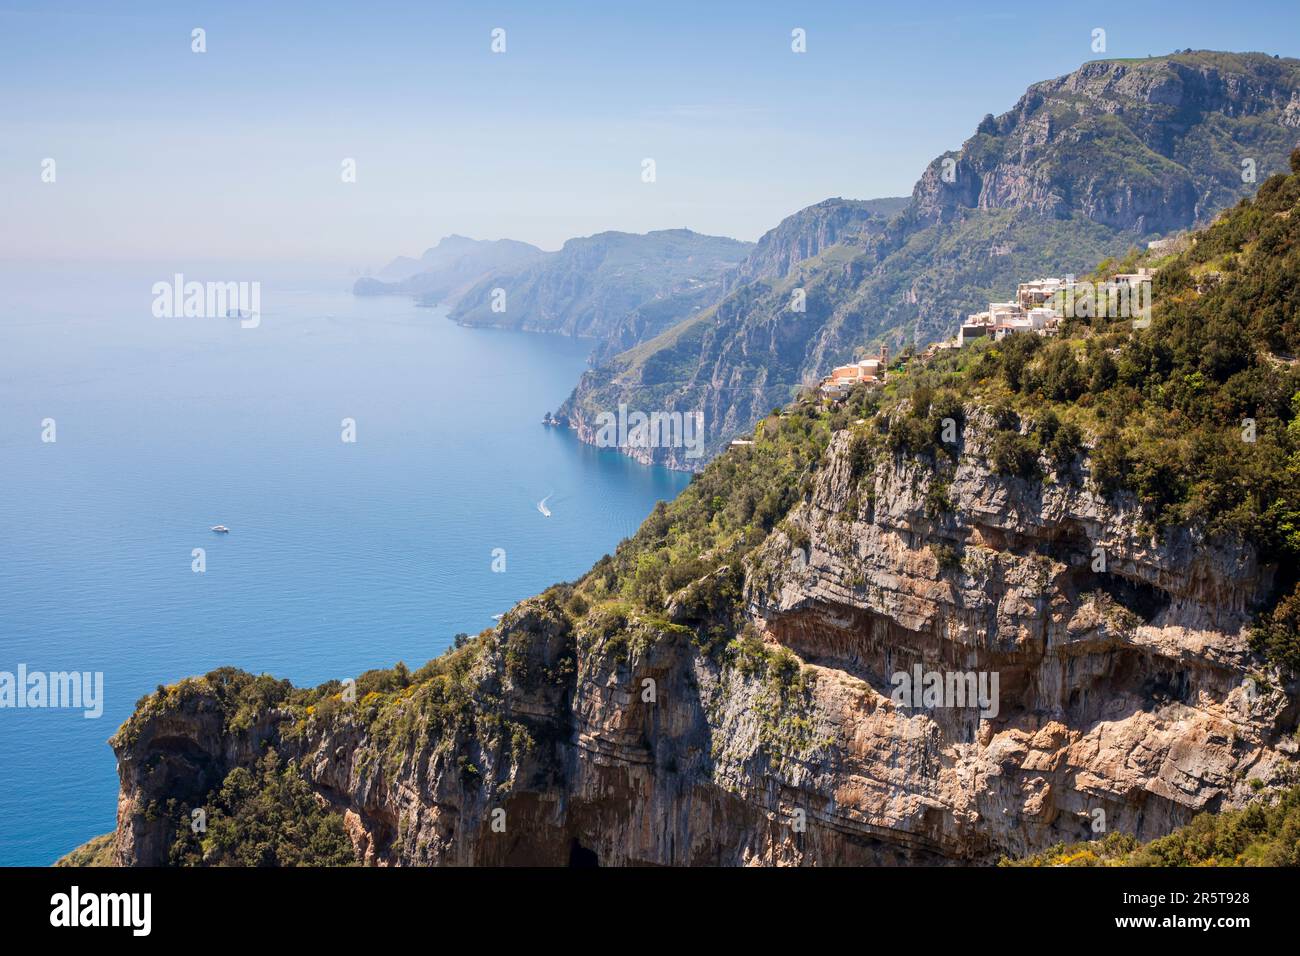 The hiking trail Sentiero degli Dei ( Path of the Gods) along the Amalfi Coast Stock Photo